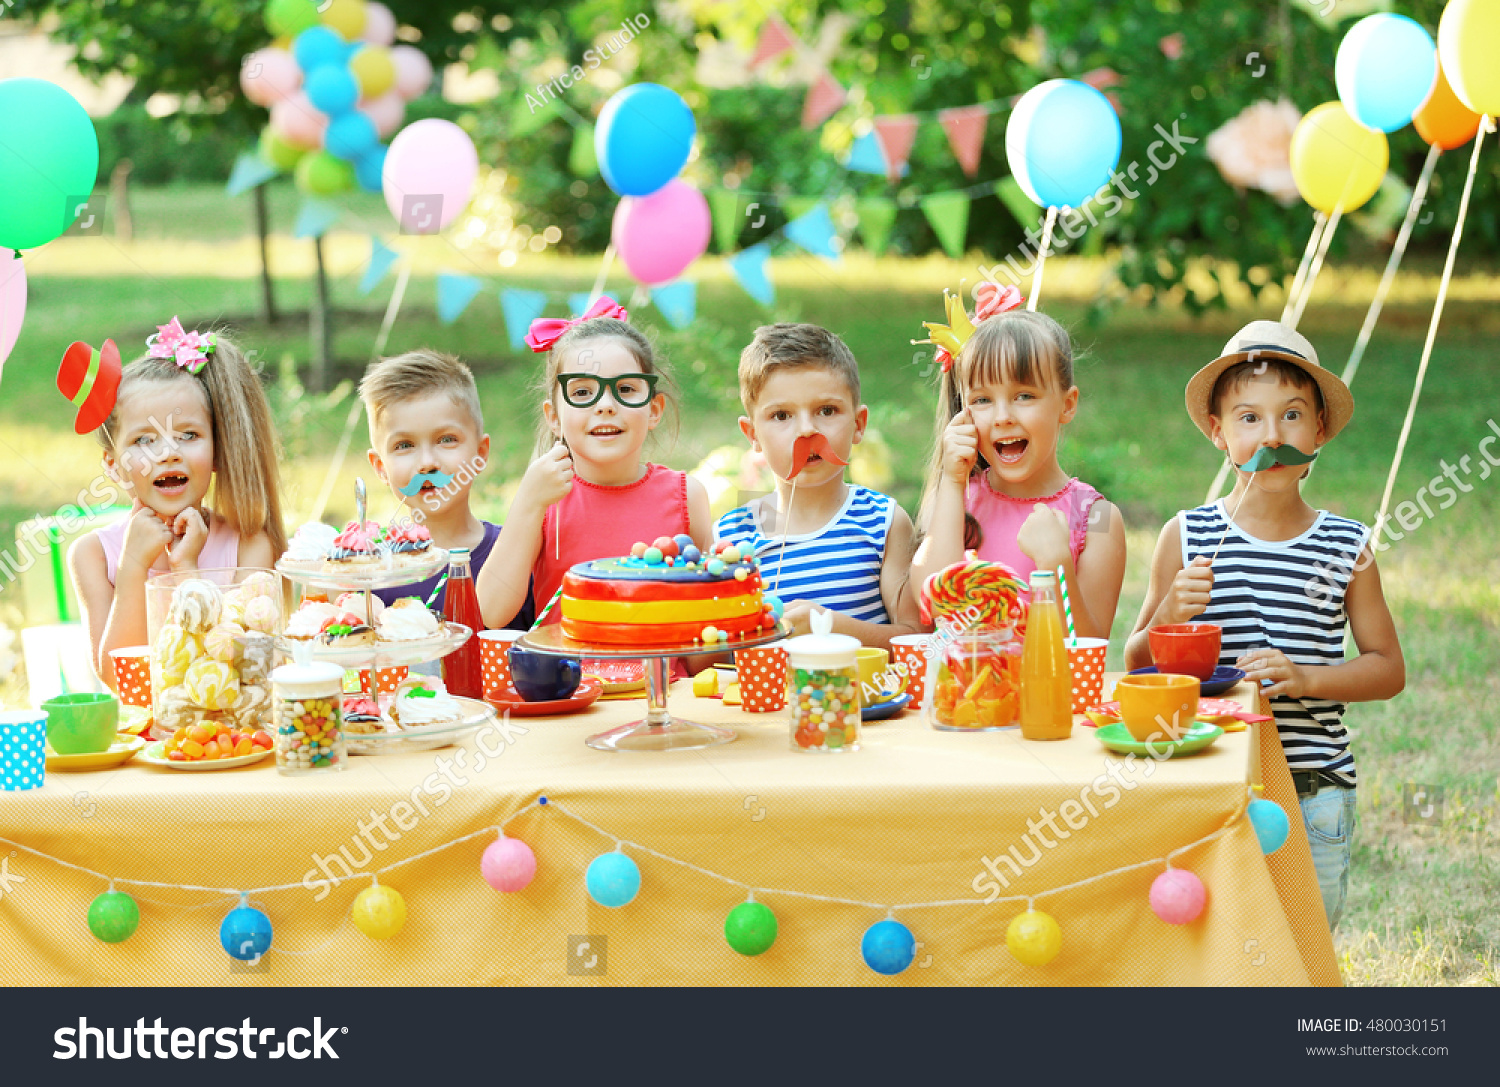 Children celebrating birthday in park #480030151